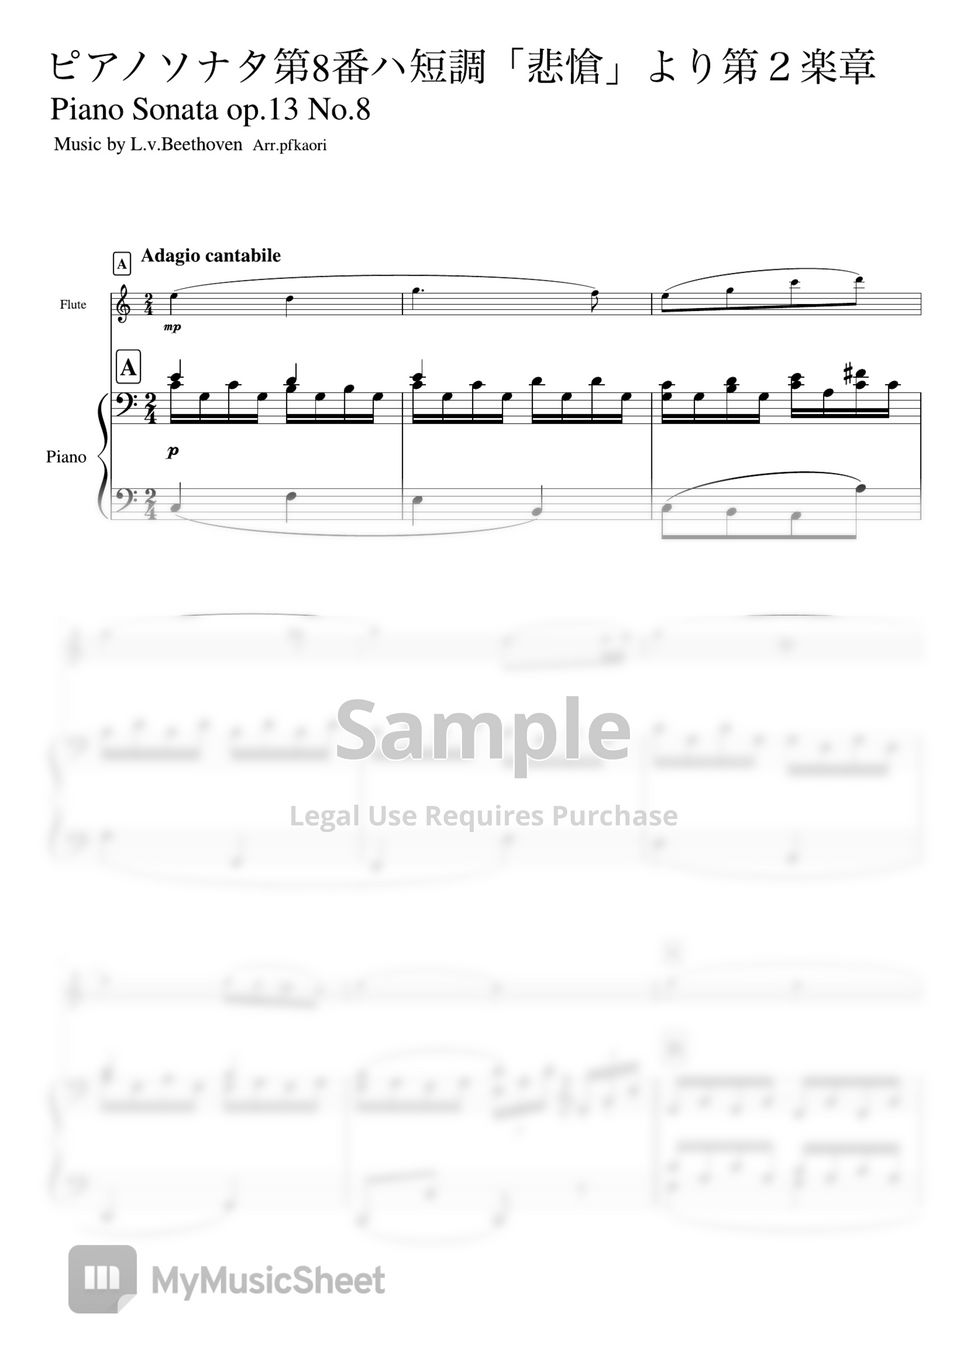 L.v.Beethoven - "Piano Sonata No. 8" 2nd Movement (Cdur/Piano & flute) by pfkaori